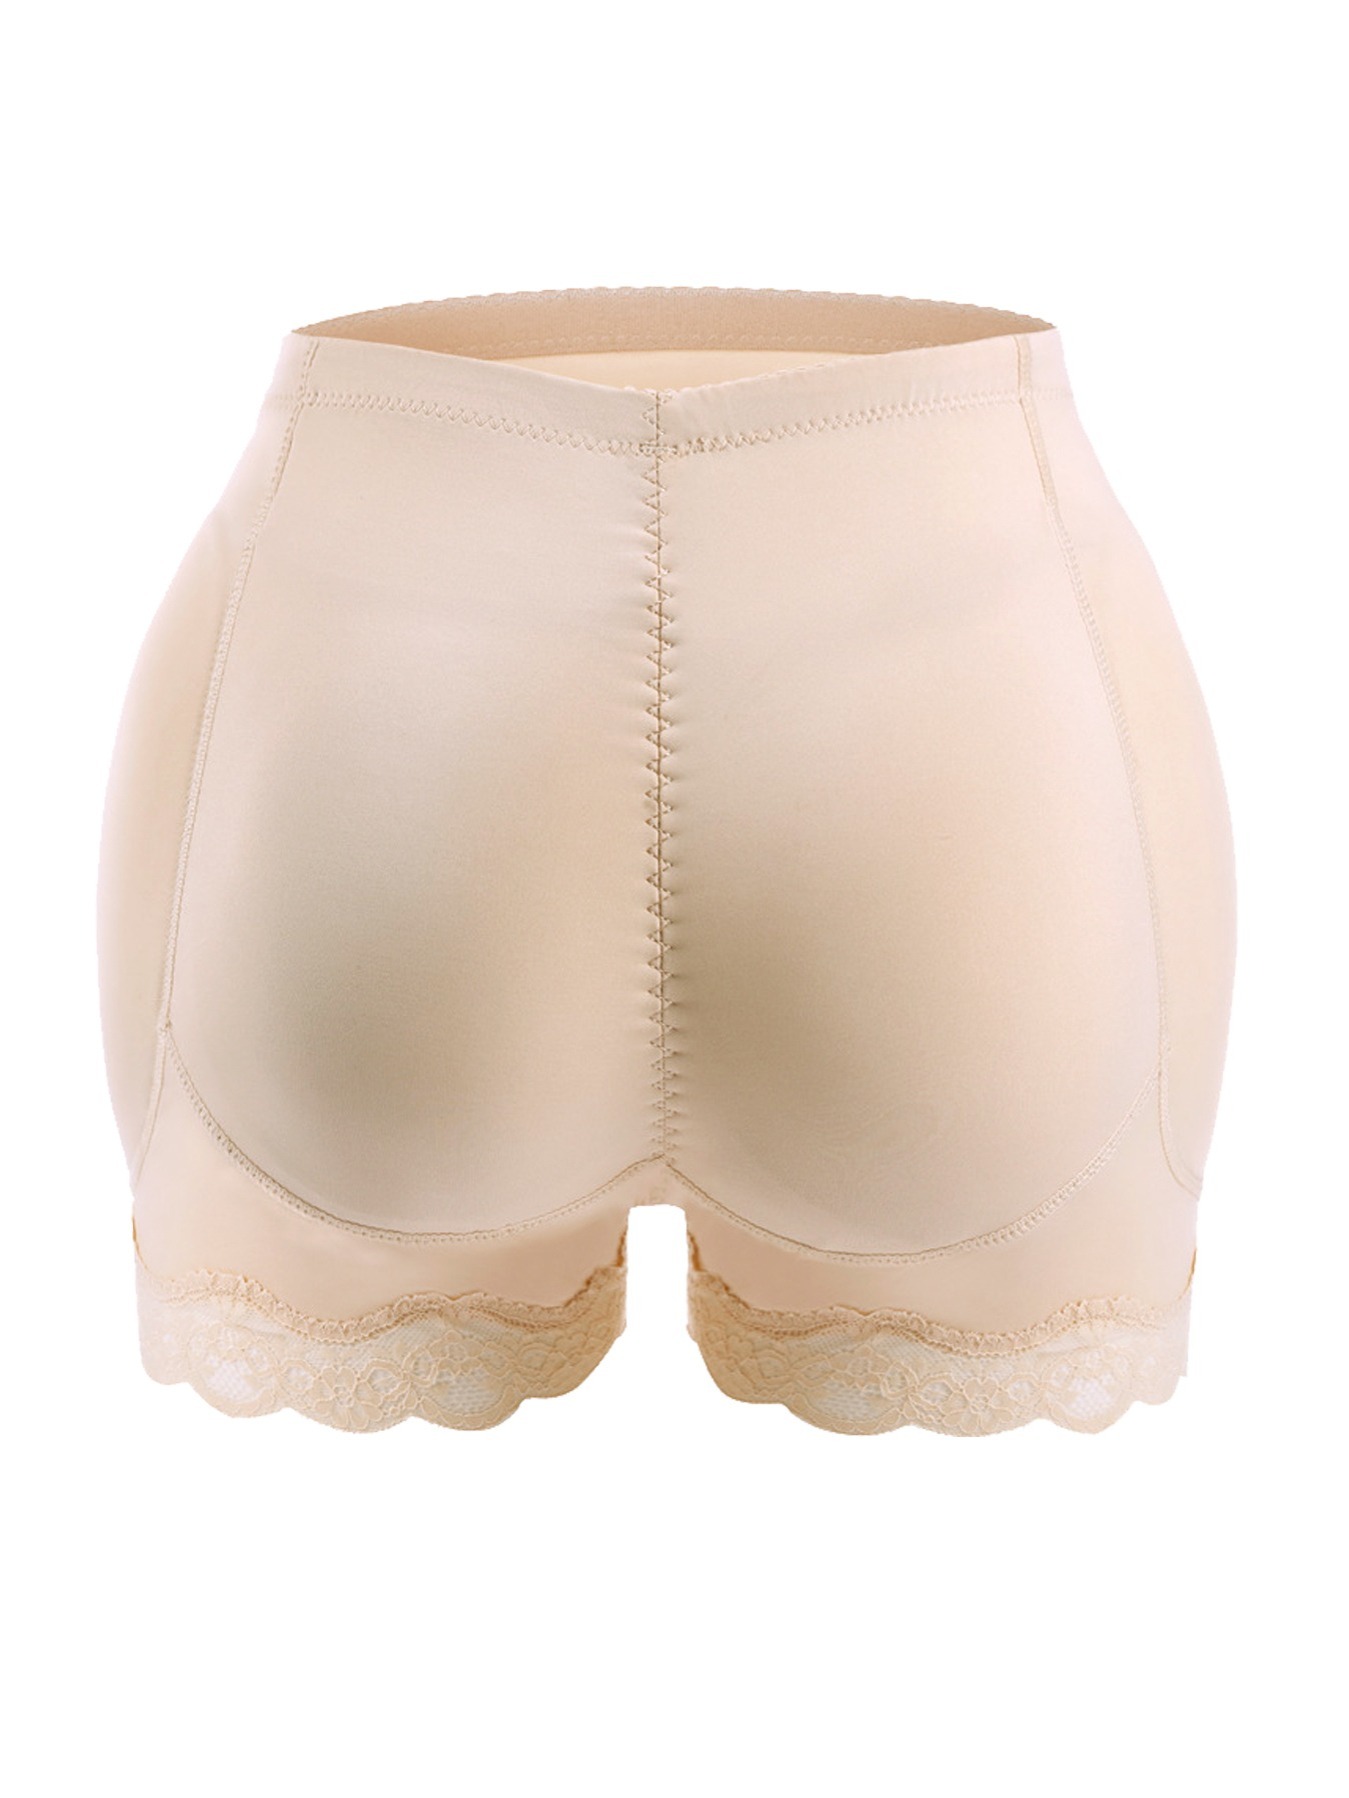 PADDED BUM PANTS Enhancer Shaper Panty Butt Lifter Booty Boyshorts Underwear  UK £13.99 - PicClick UK